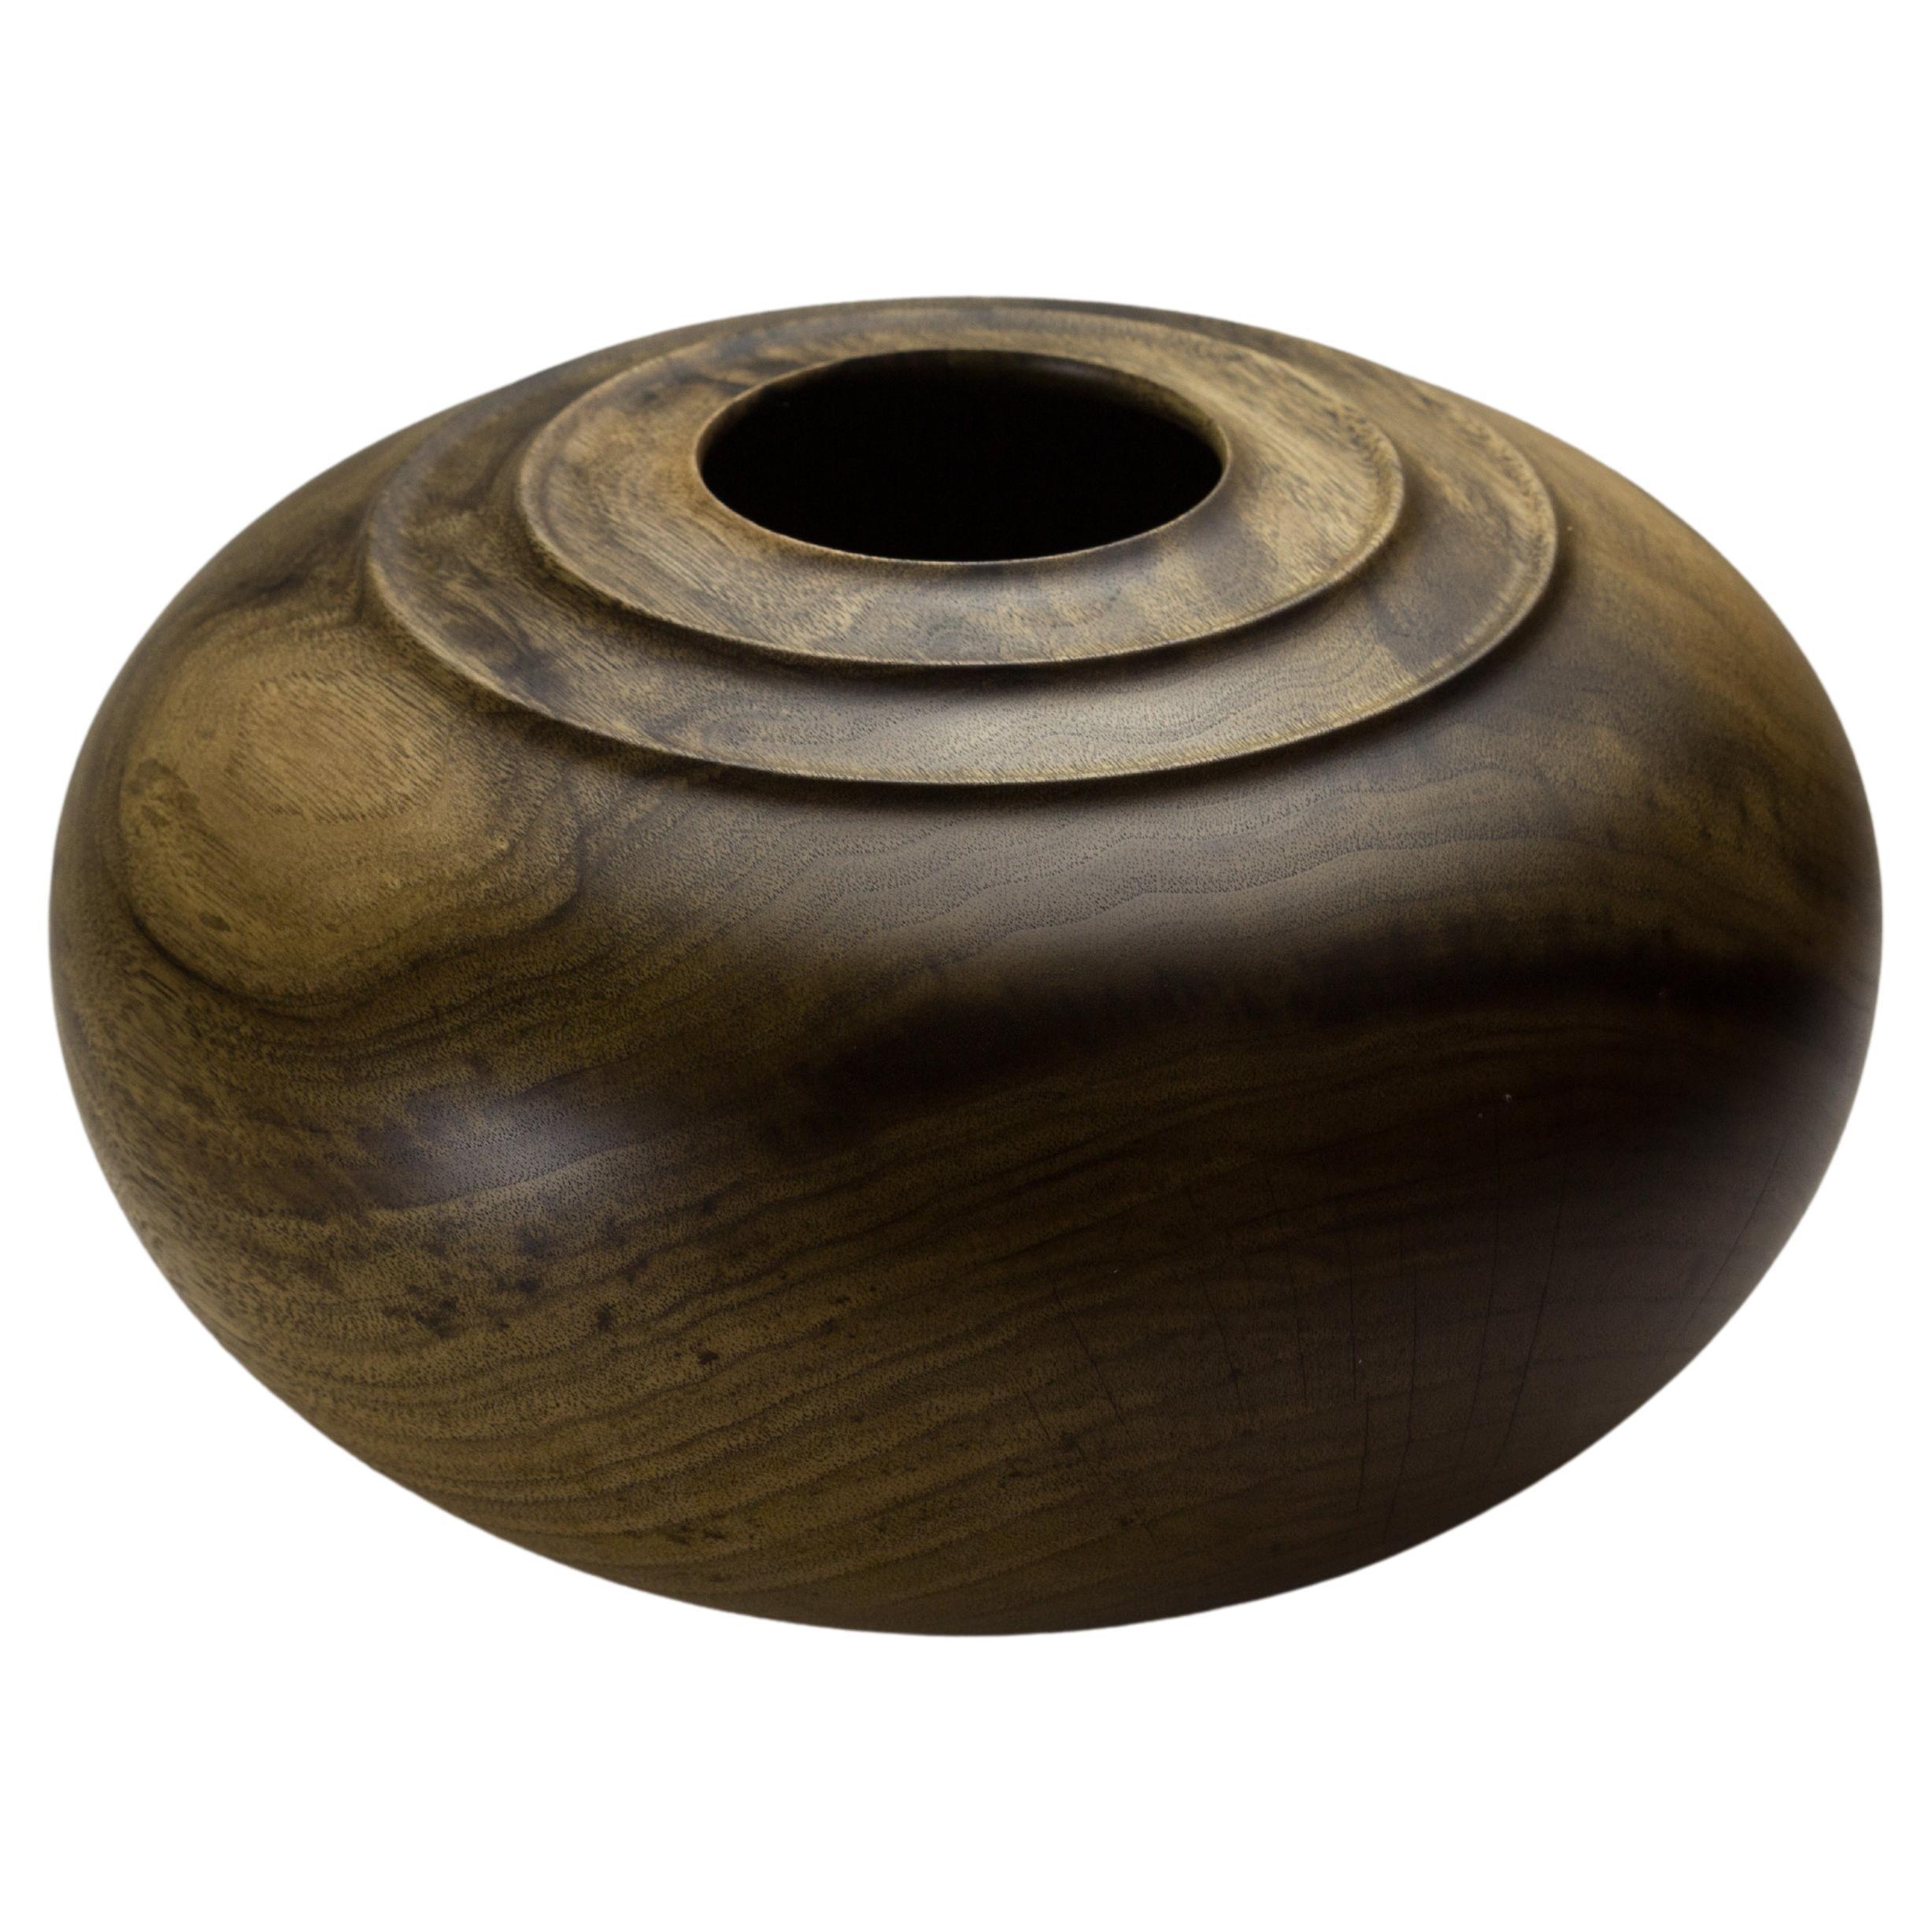 Unique Walnut Bowl by Vlad Droz